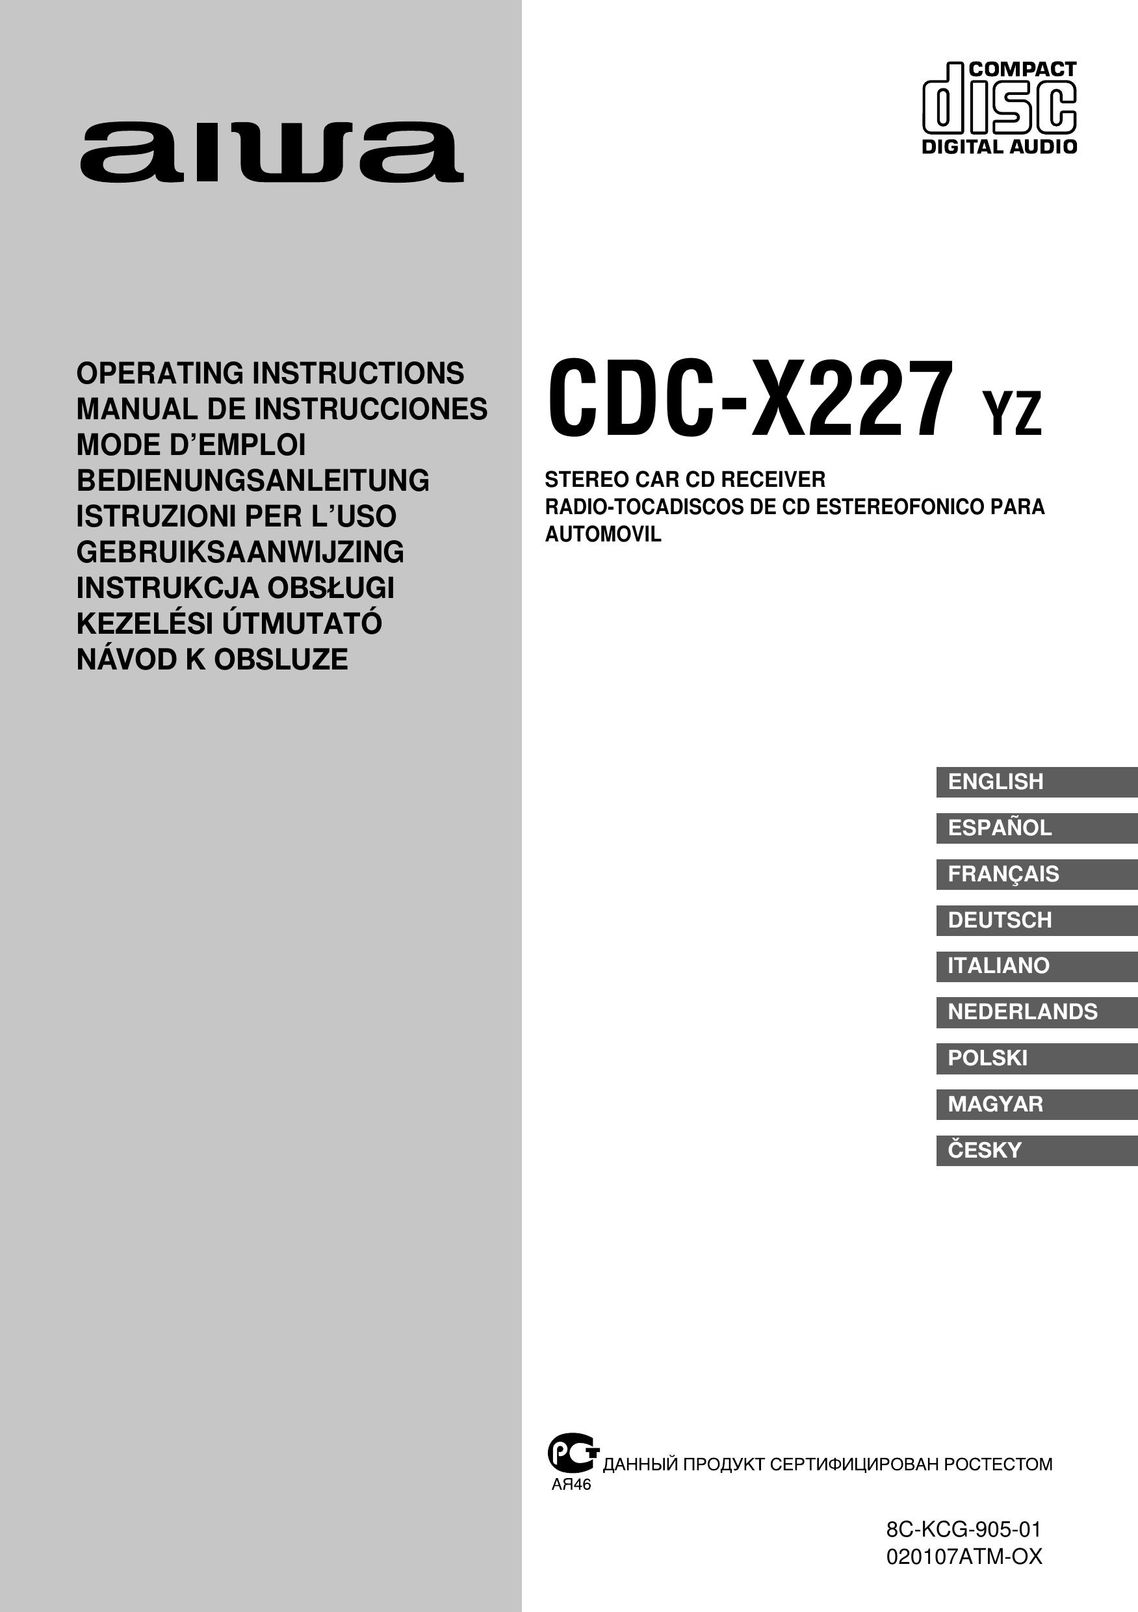 Aiwa CDC-X227 YZ Car Stereo System User Manual